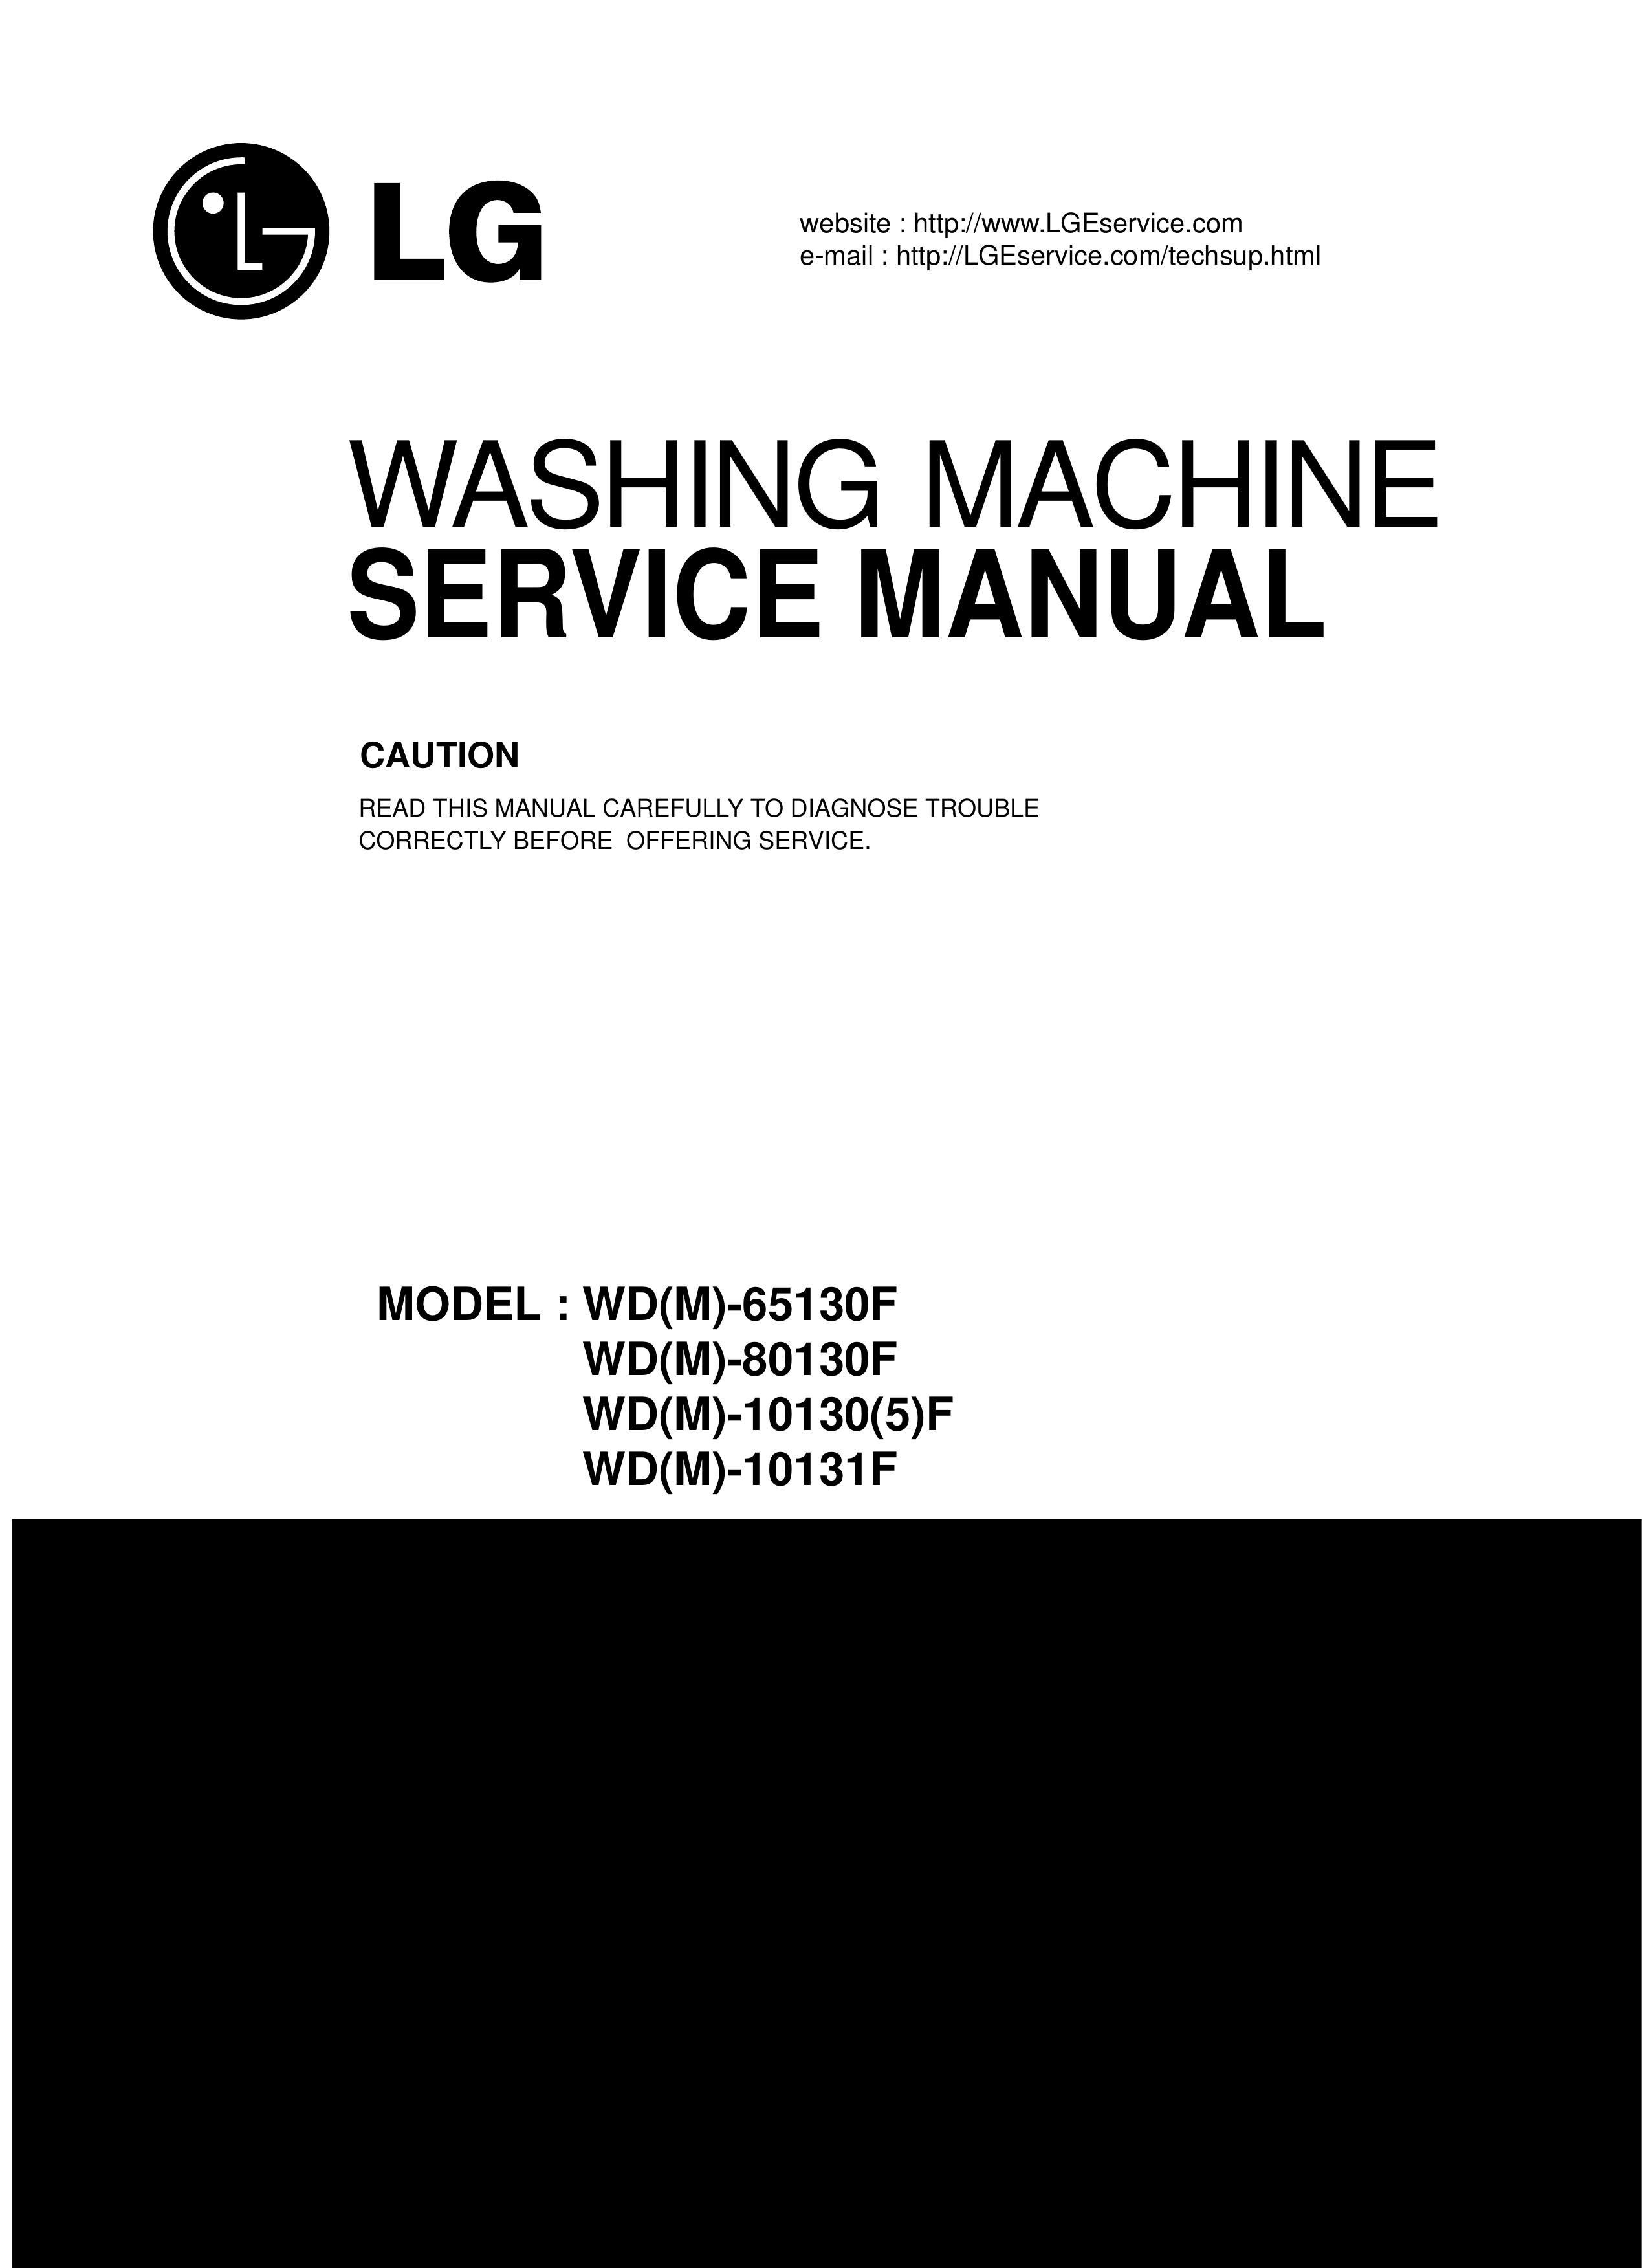 LG Electronics WD(M)-10130(5)F Washer User Manual